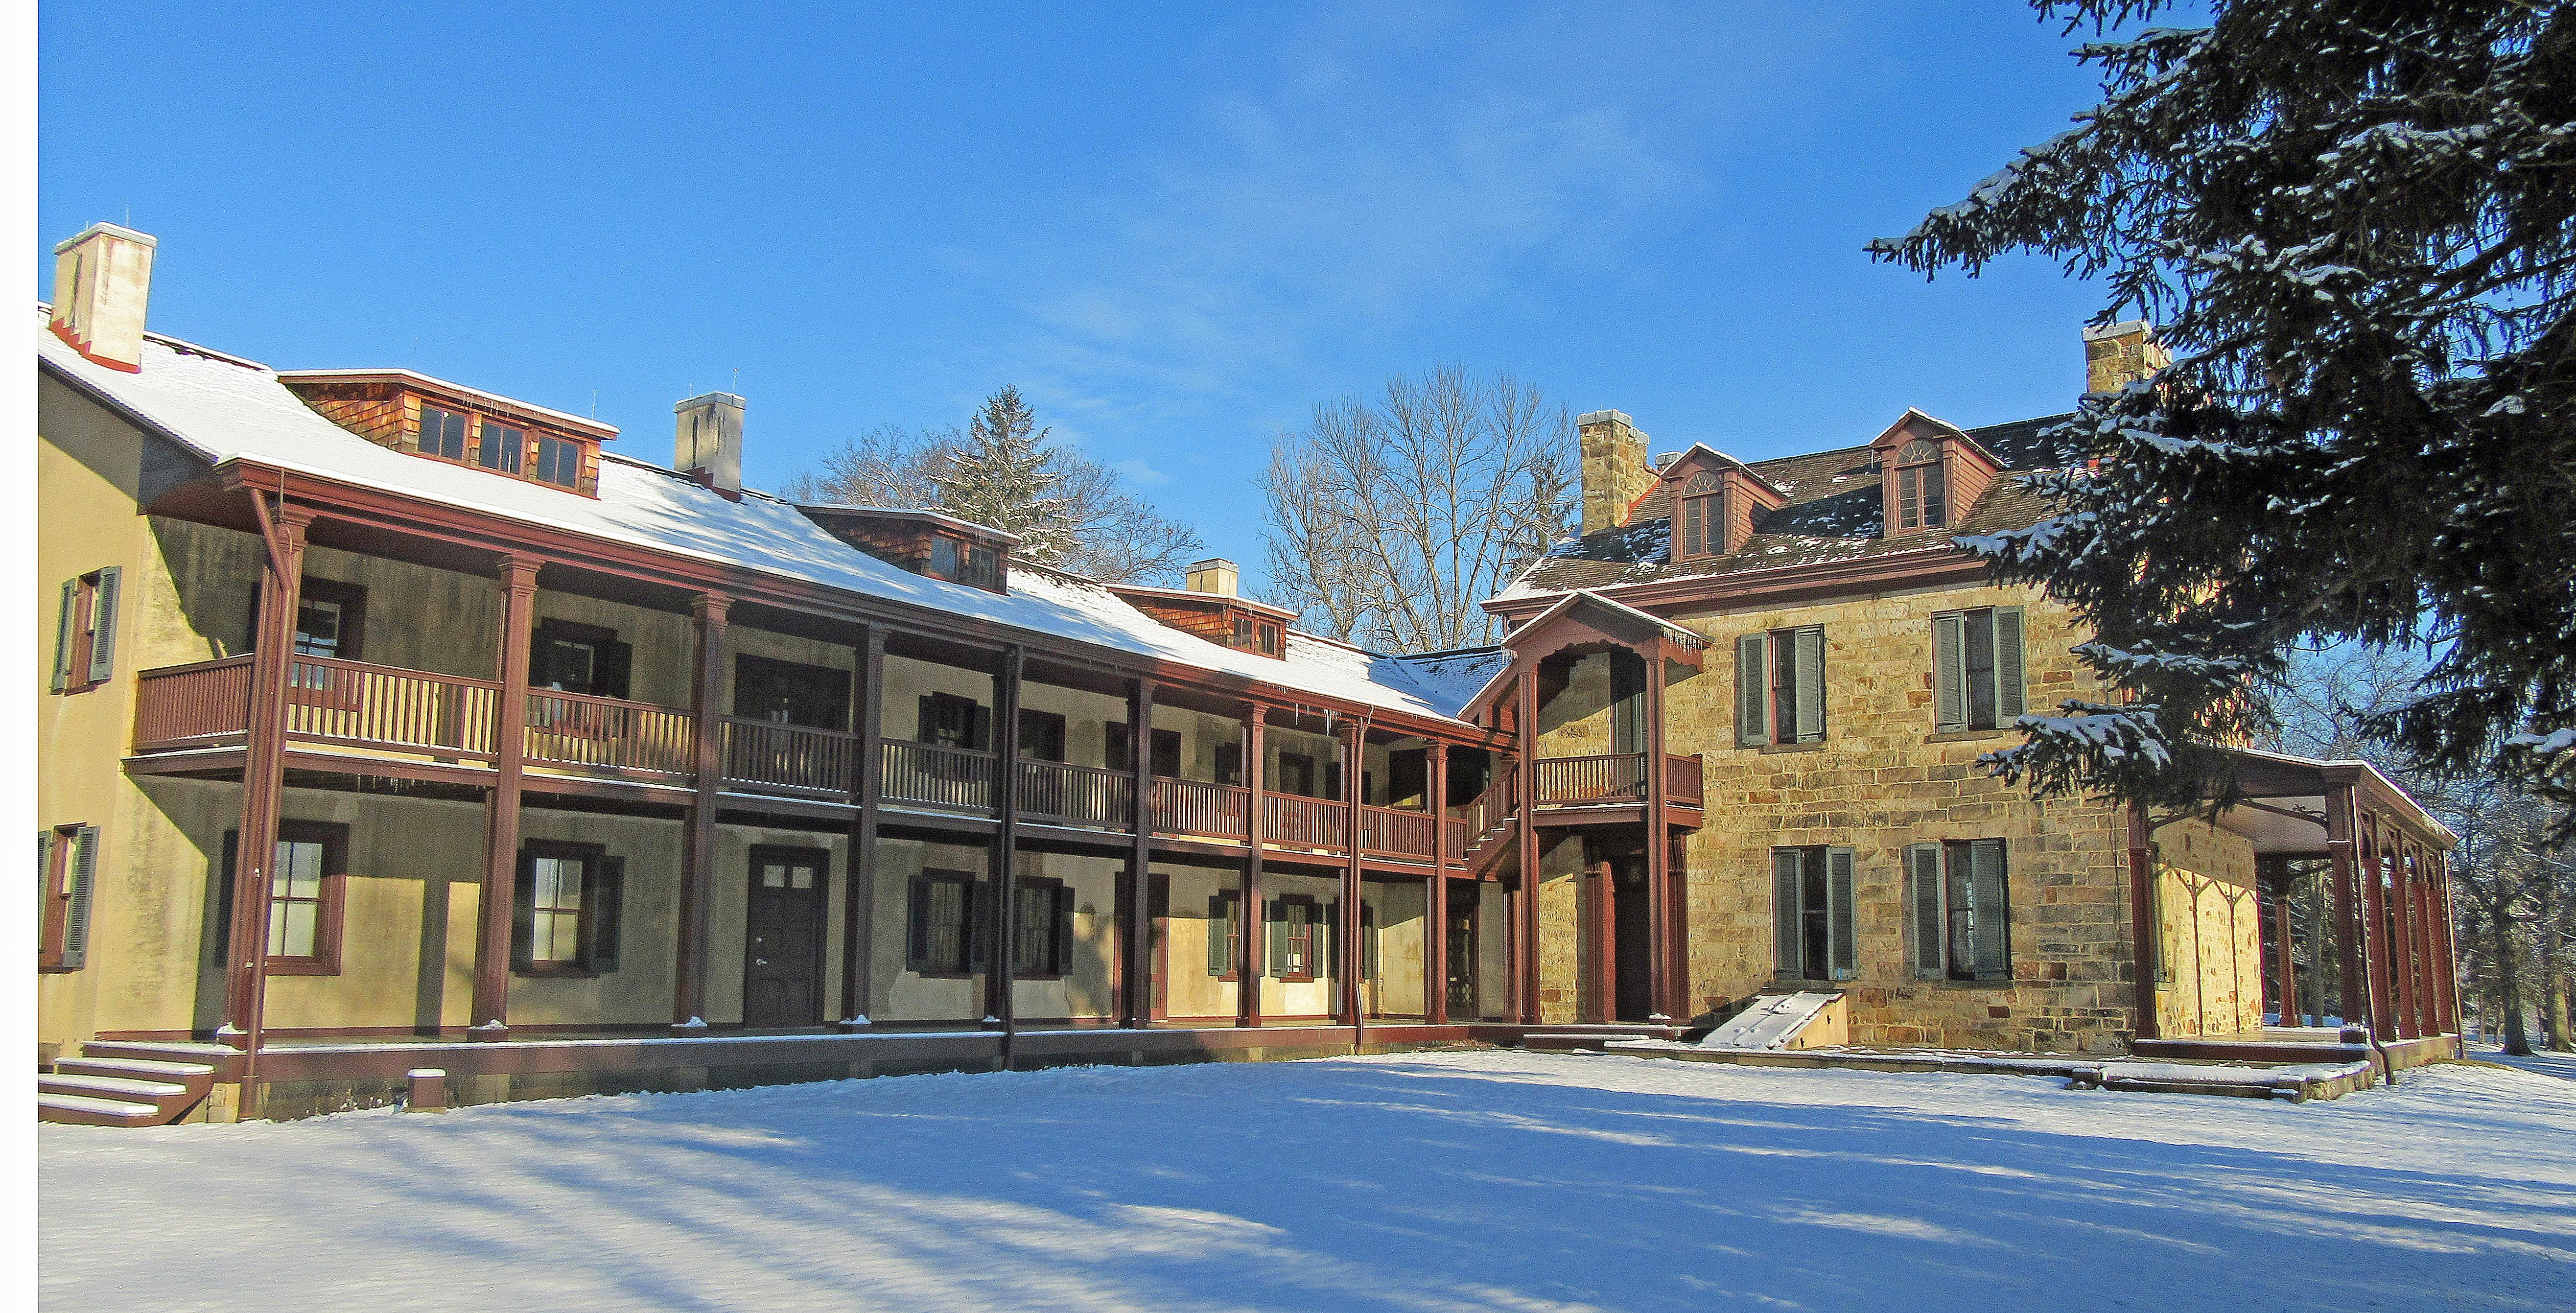 Gallatin House in Winter